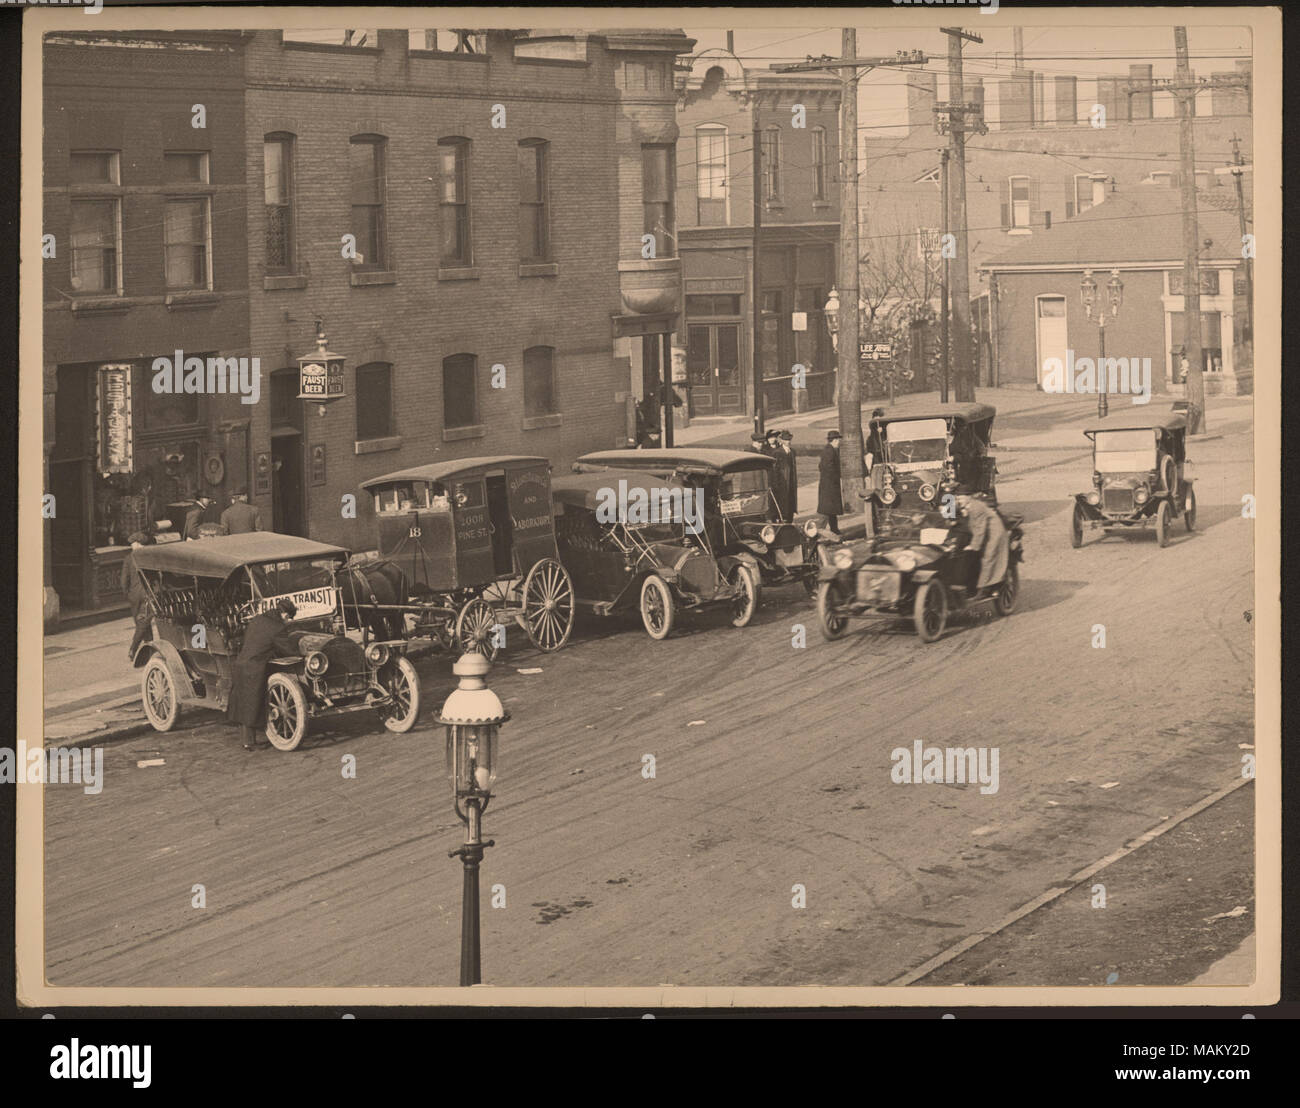 Vintage: St. Louis Streets (circa 1900)